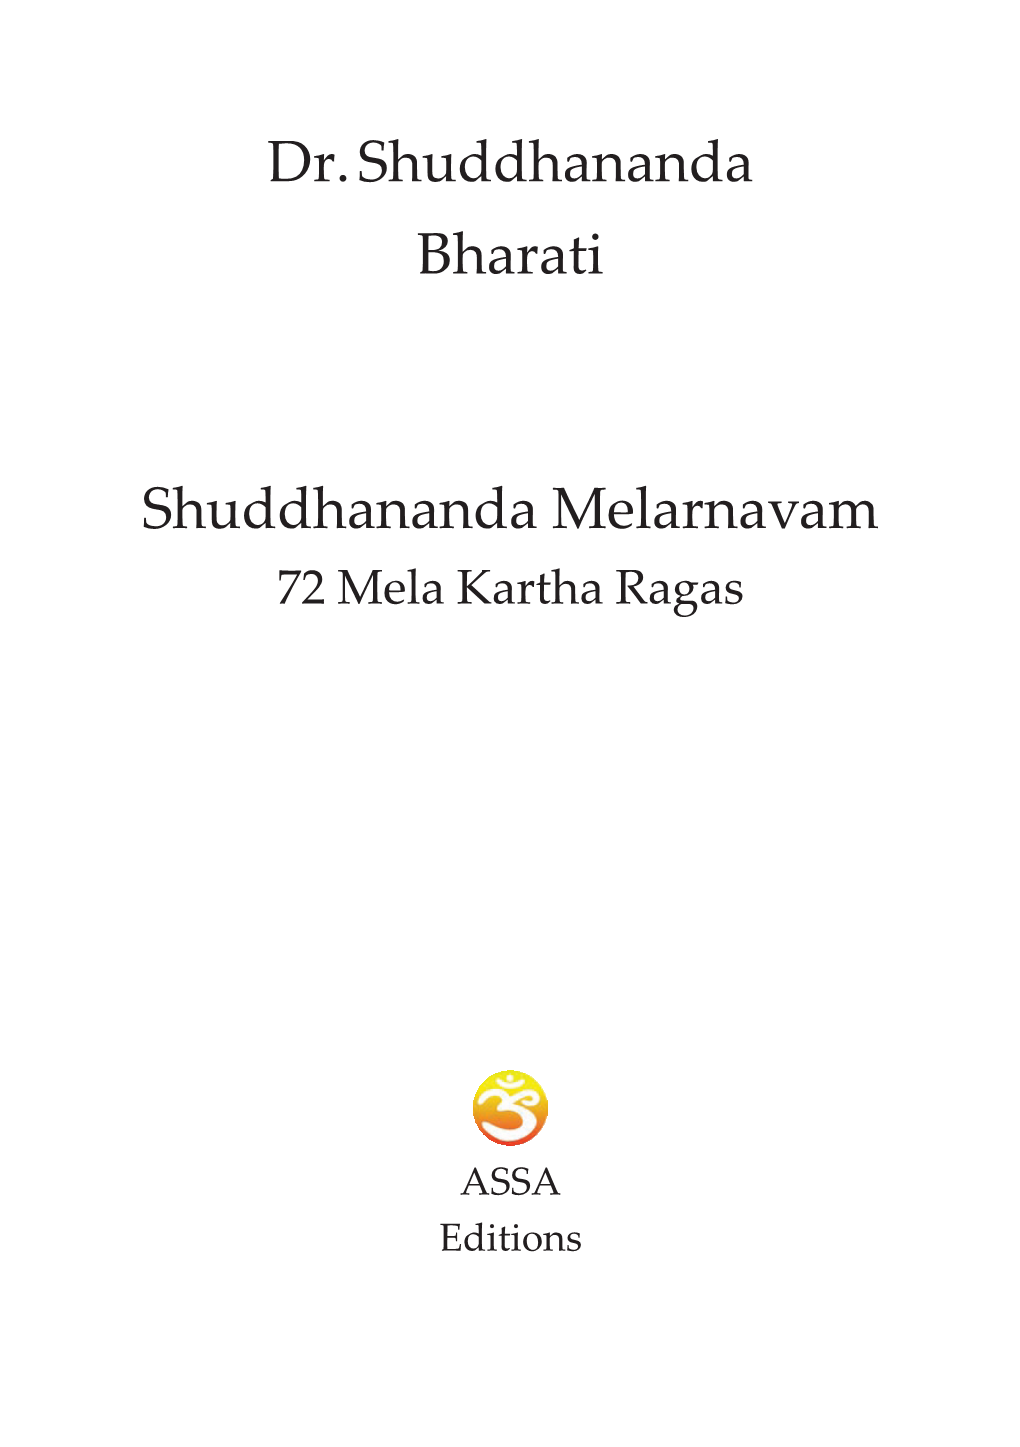 Extracts Shuddhananda Melarnavam